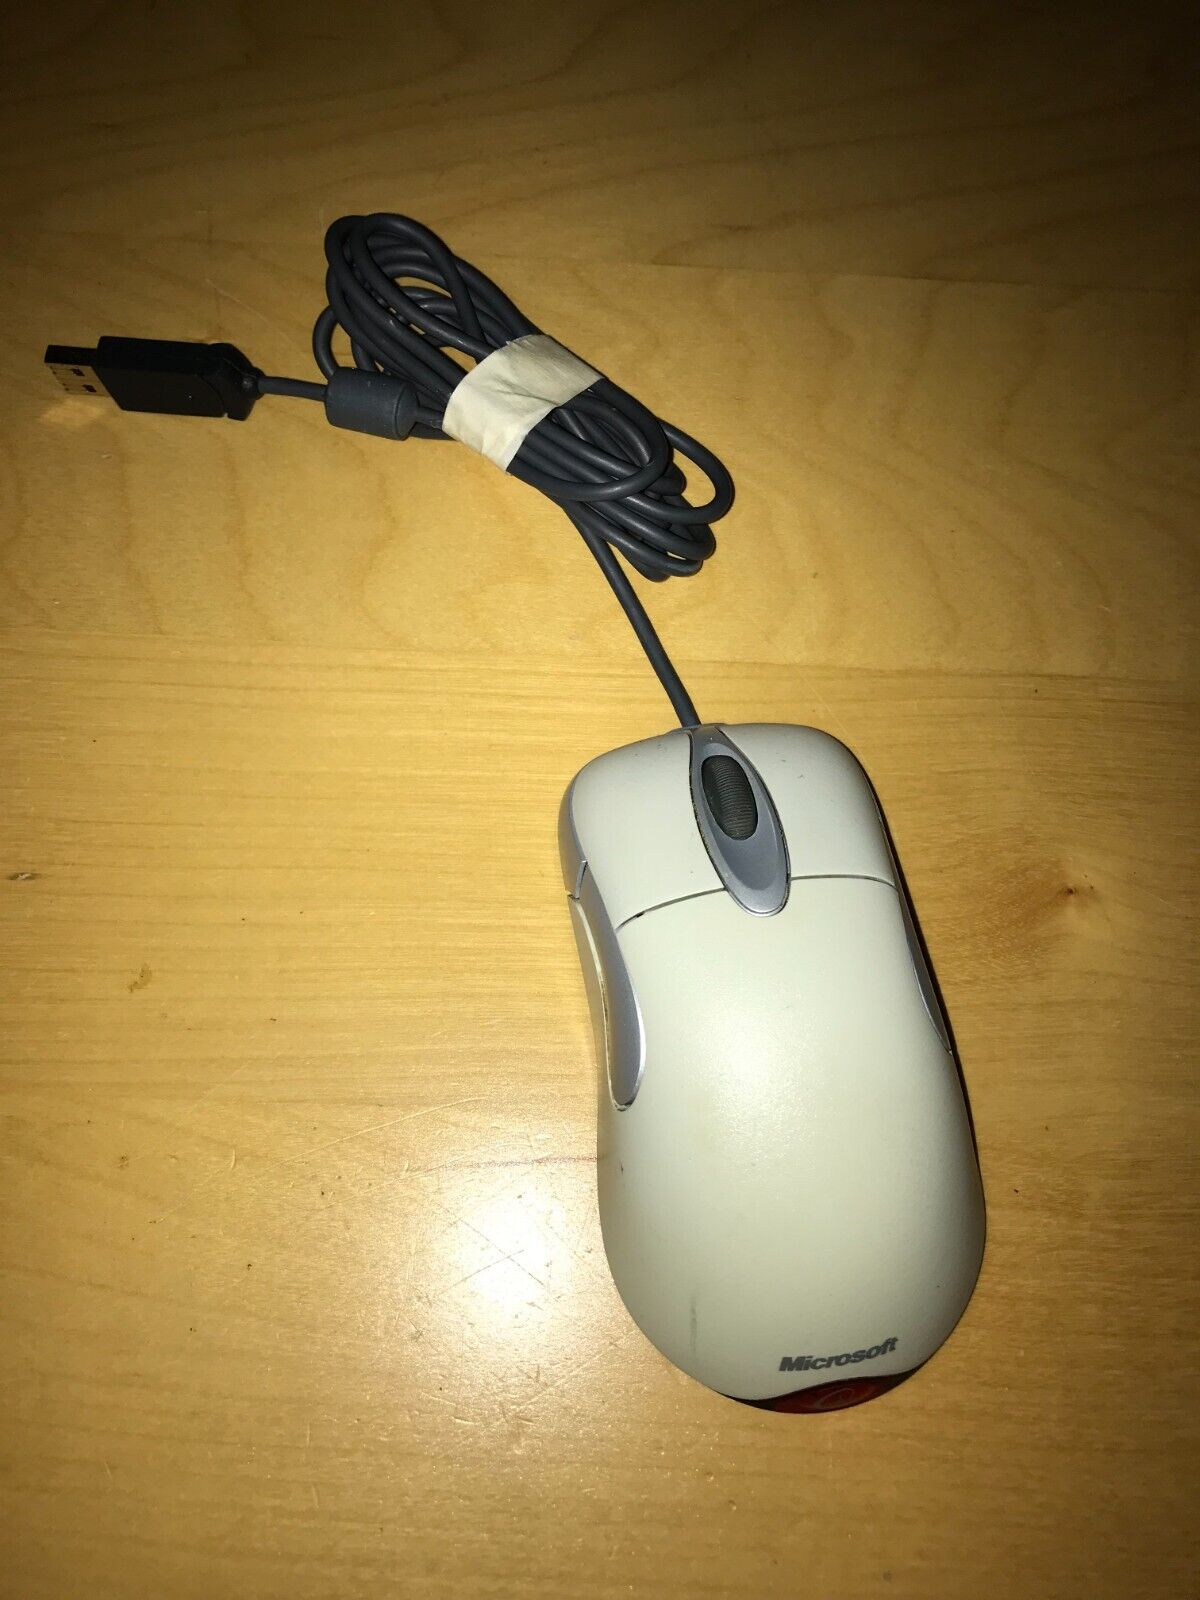 Microsoft Intellimouse 1.1 Optical Mouse (USED) VTG Retro Gaming BEAUTIFUL 